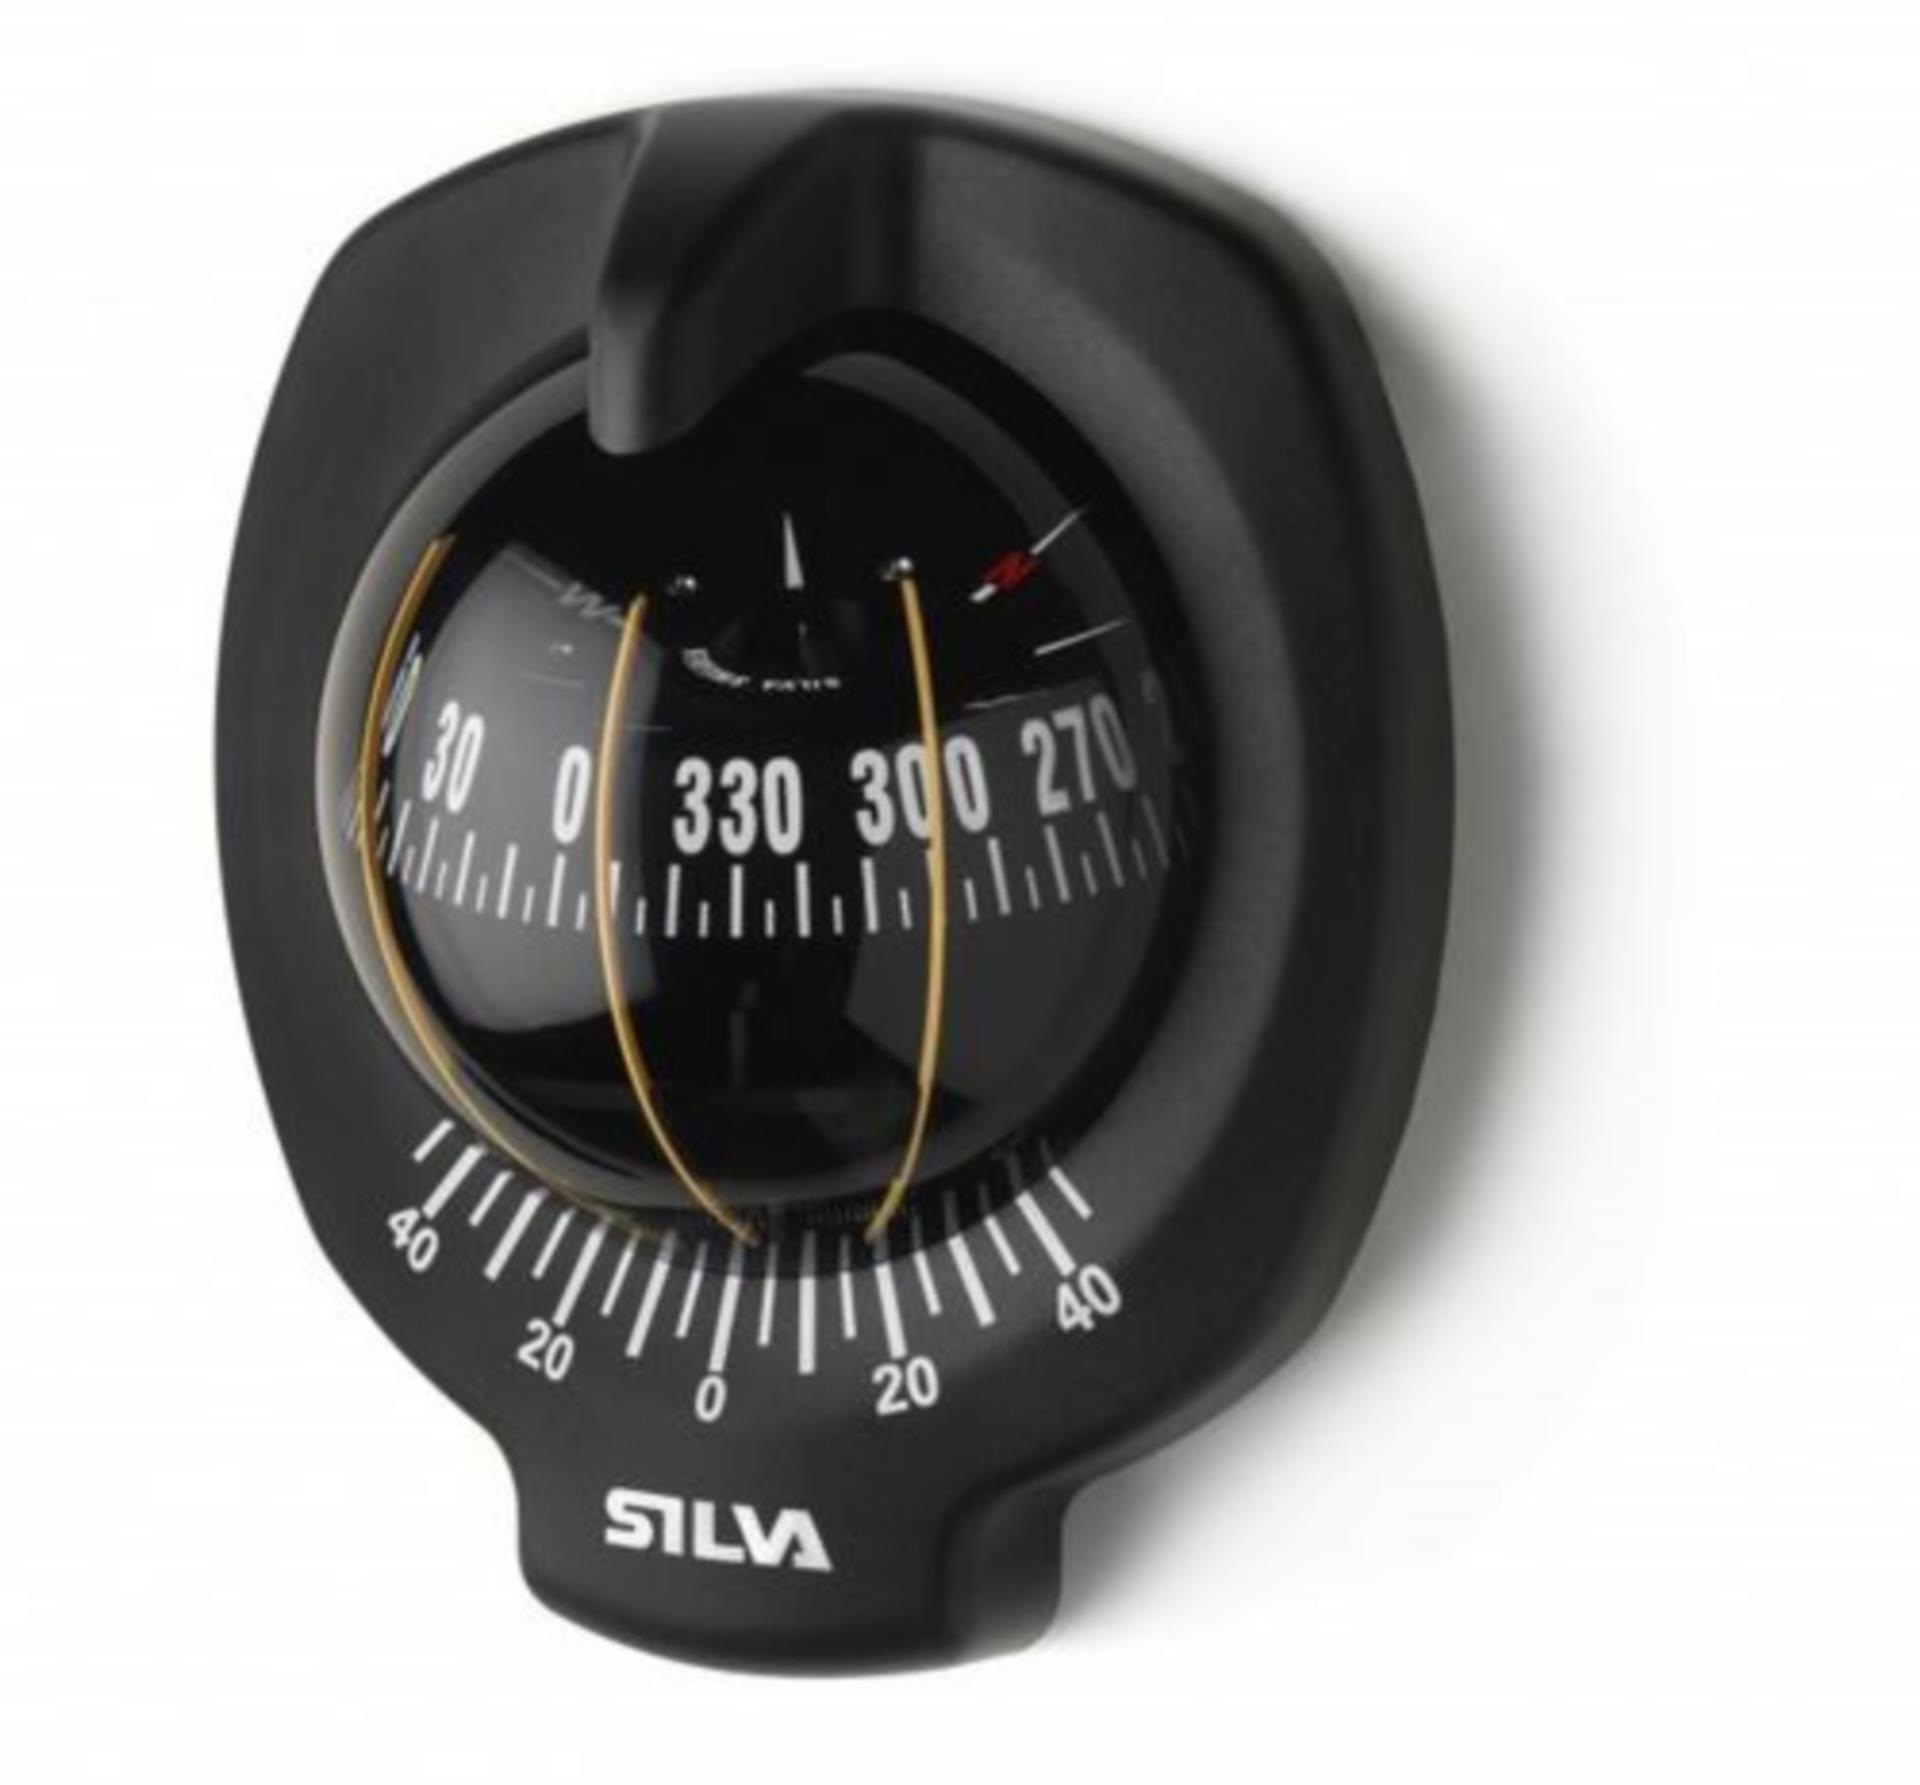 Silva Kompass 102 B/H